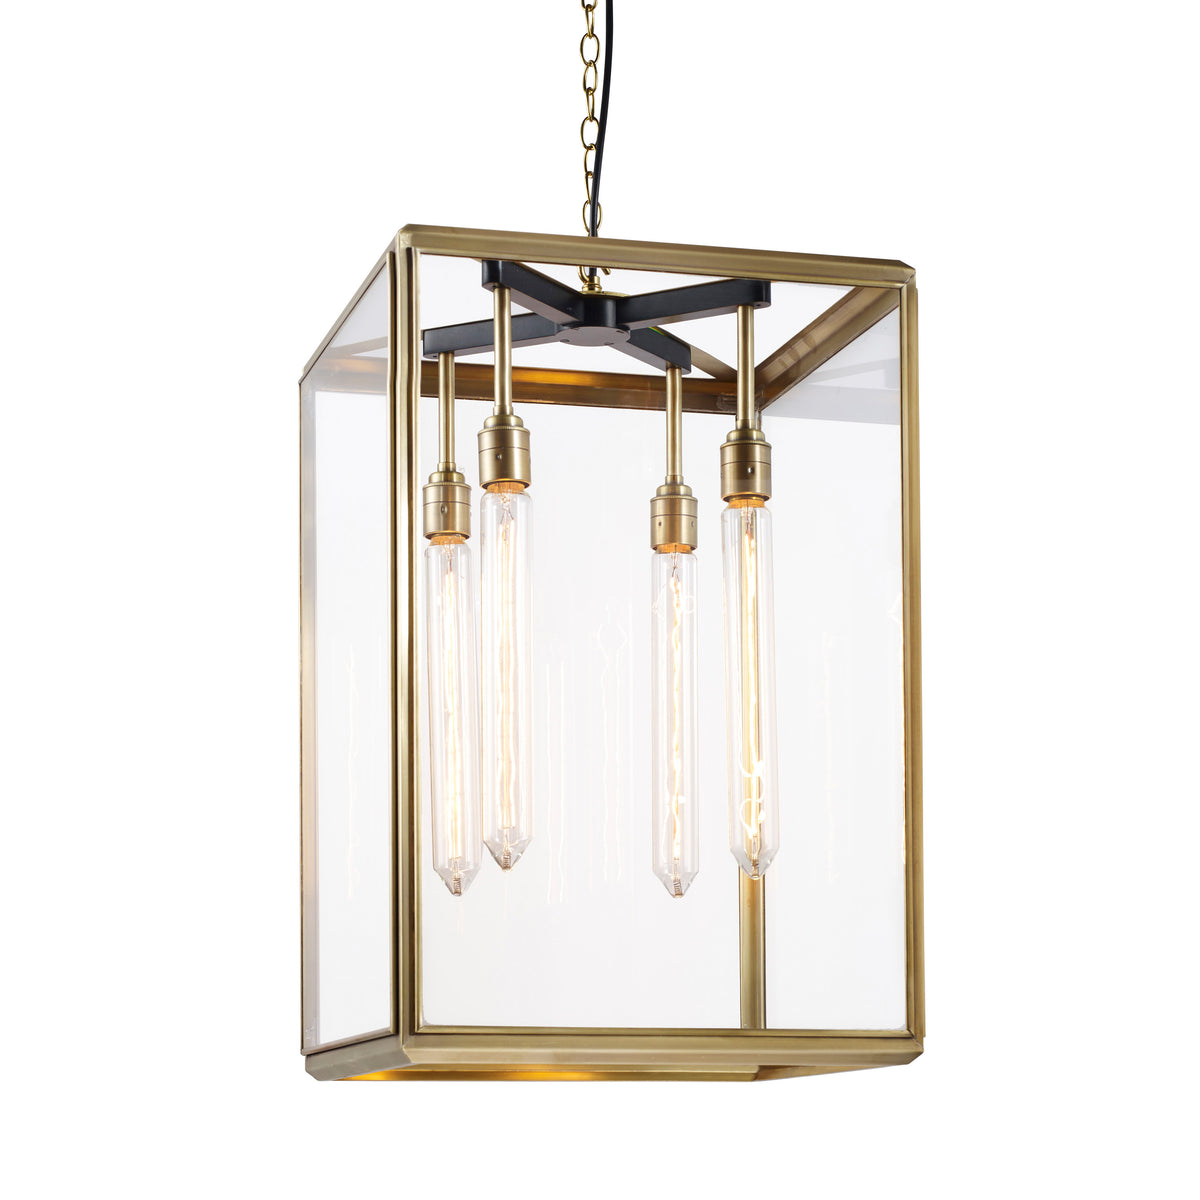 J Adams Hazel Lantern Pendant large box light in brass with clear glass